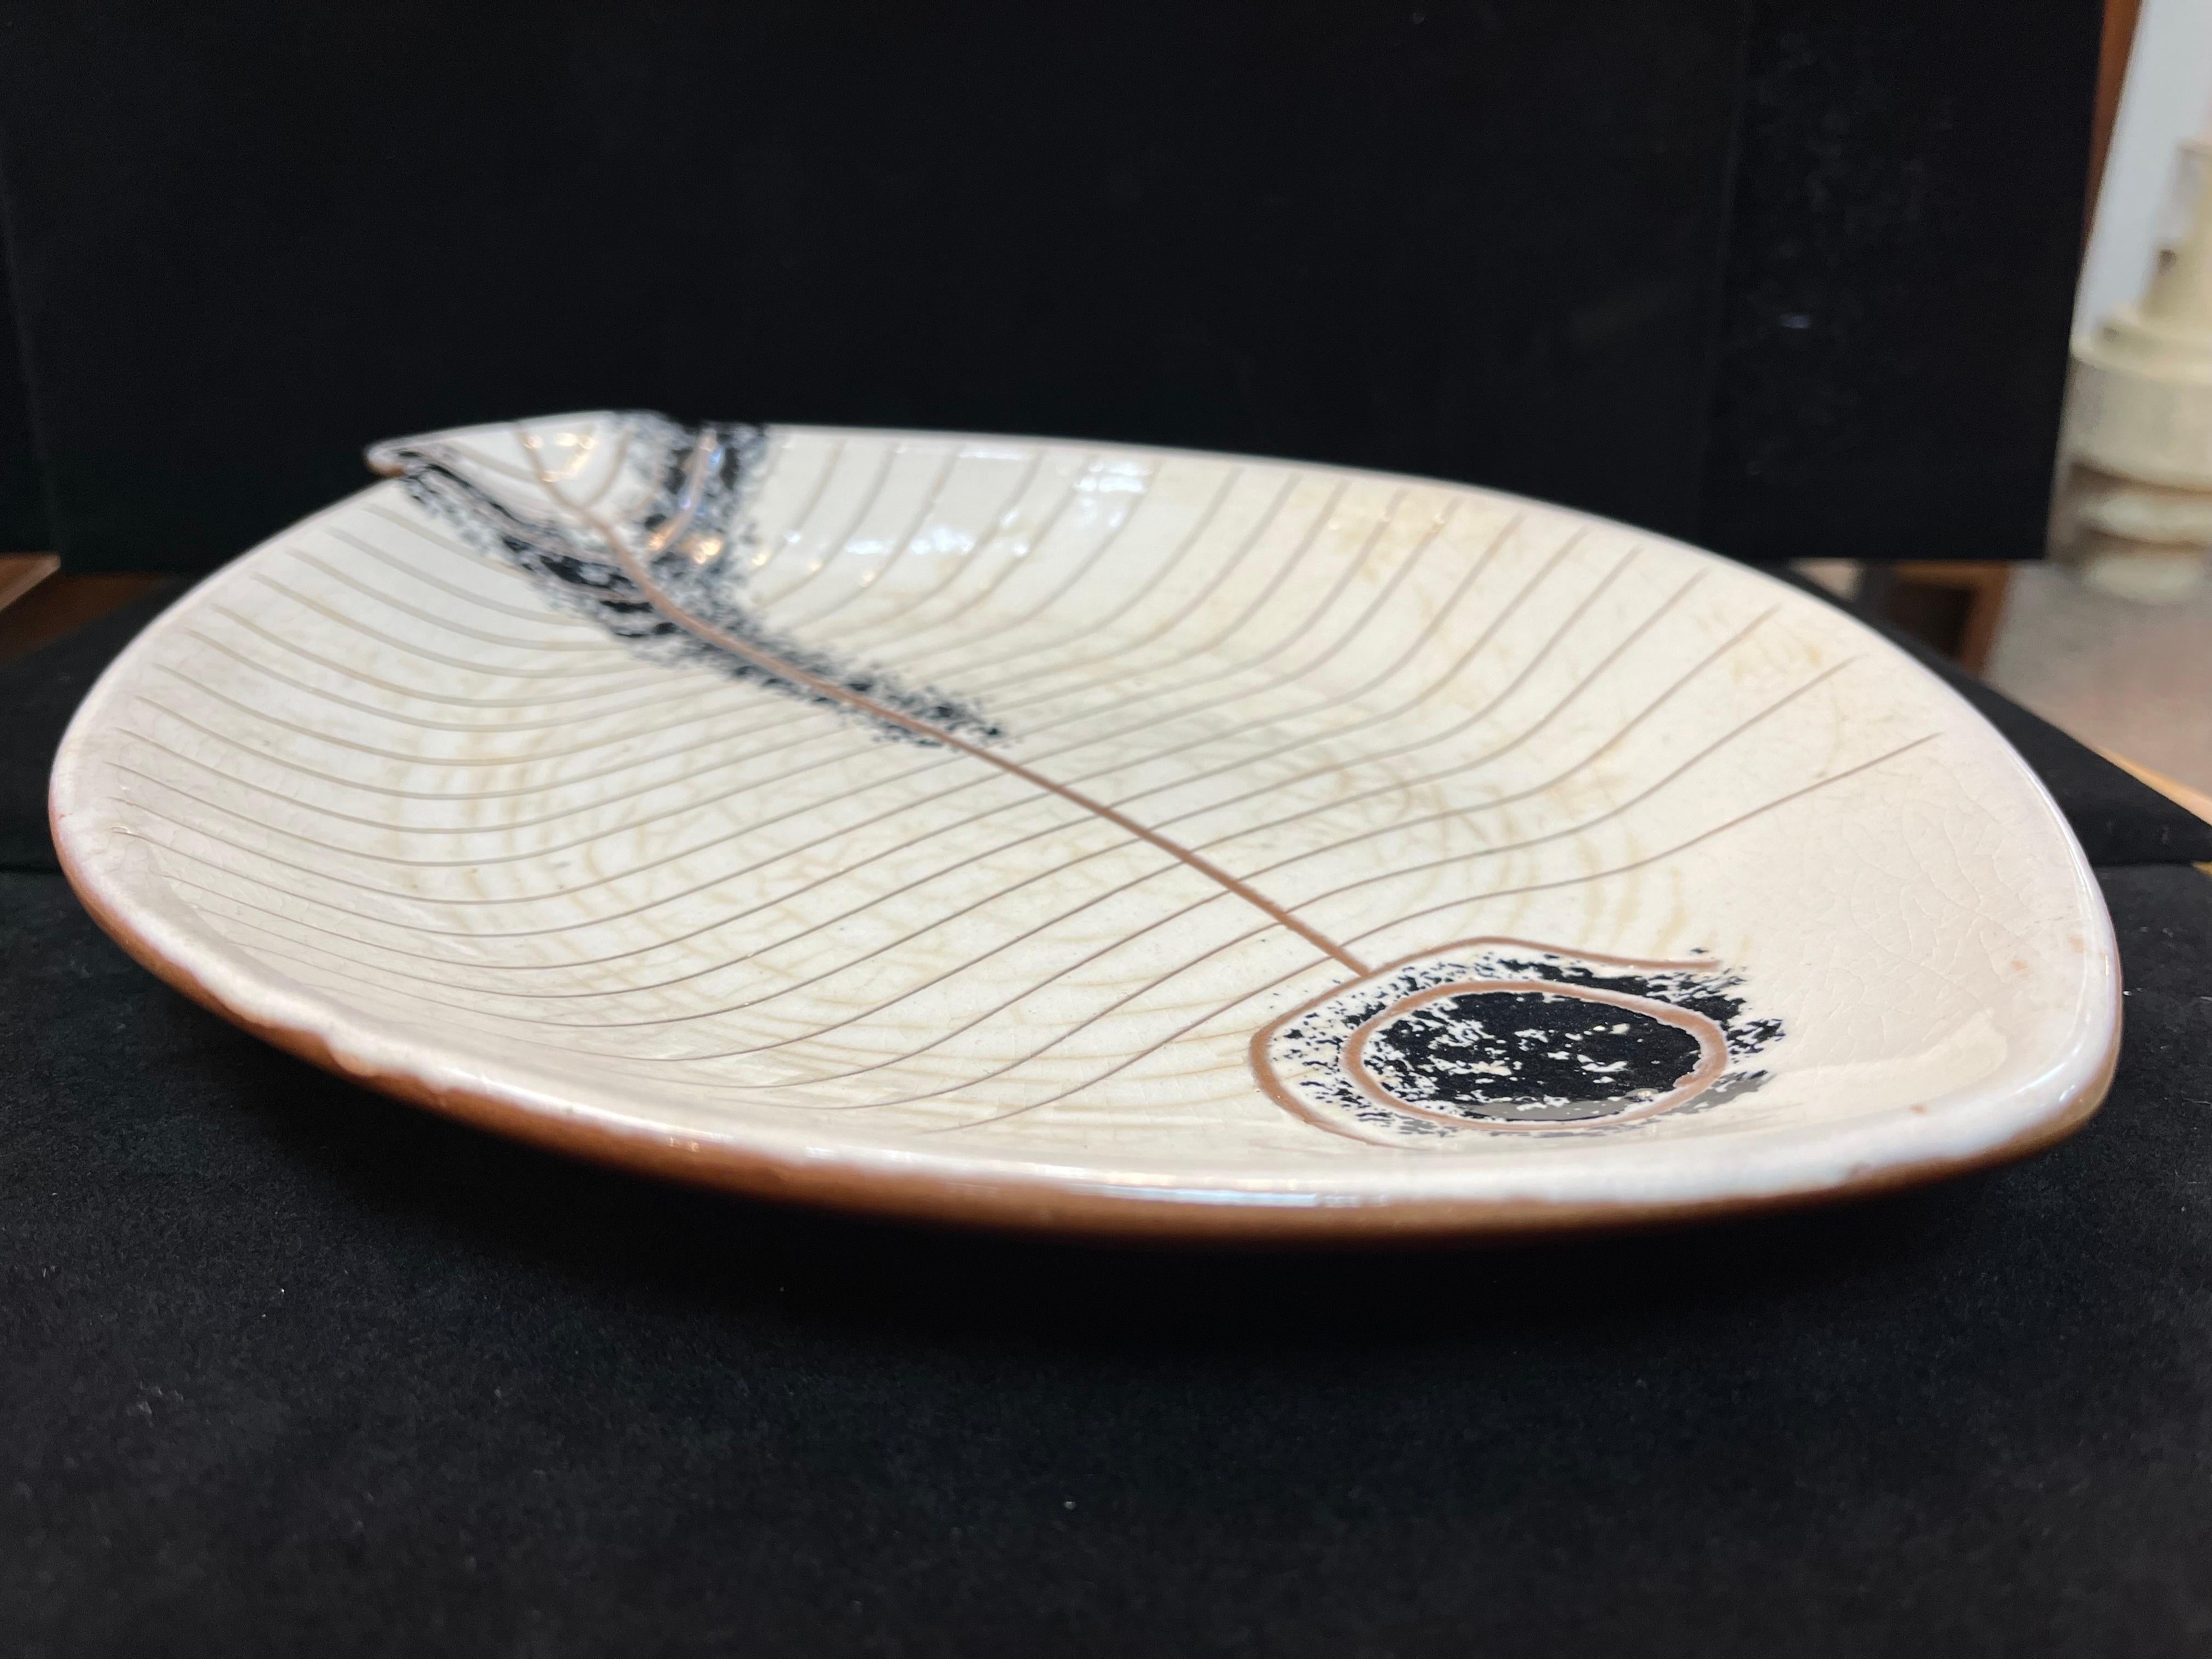 A LaGardo Tackett and Ken Fujita glazed ceramic mid century modern fish plate sculpture. LaGardo Tackett was a founding designer for Architectural Pottery in Los Angleles. From the British Museum, 